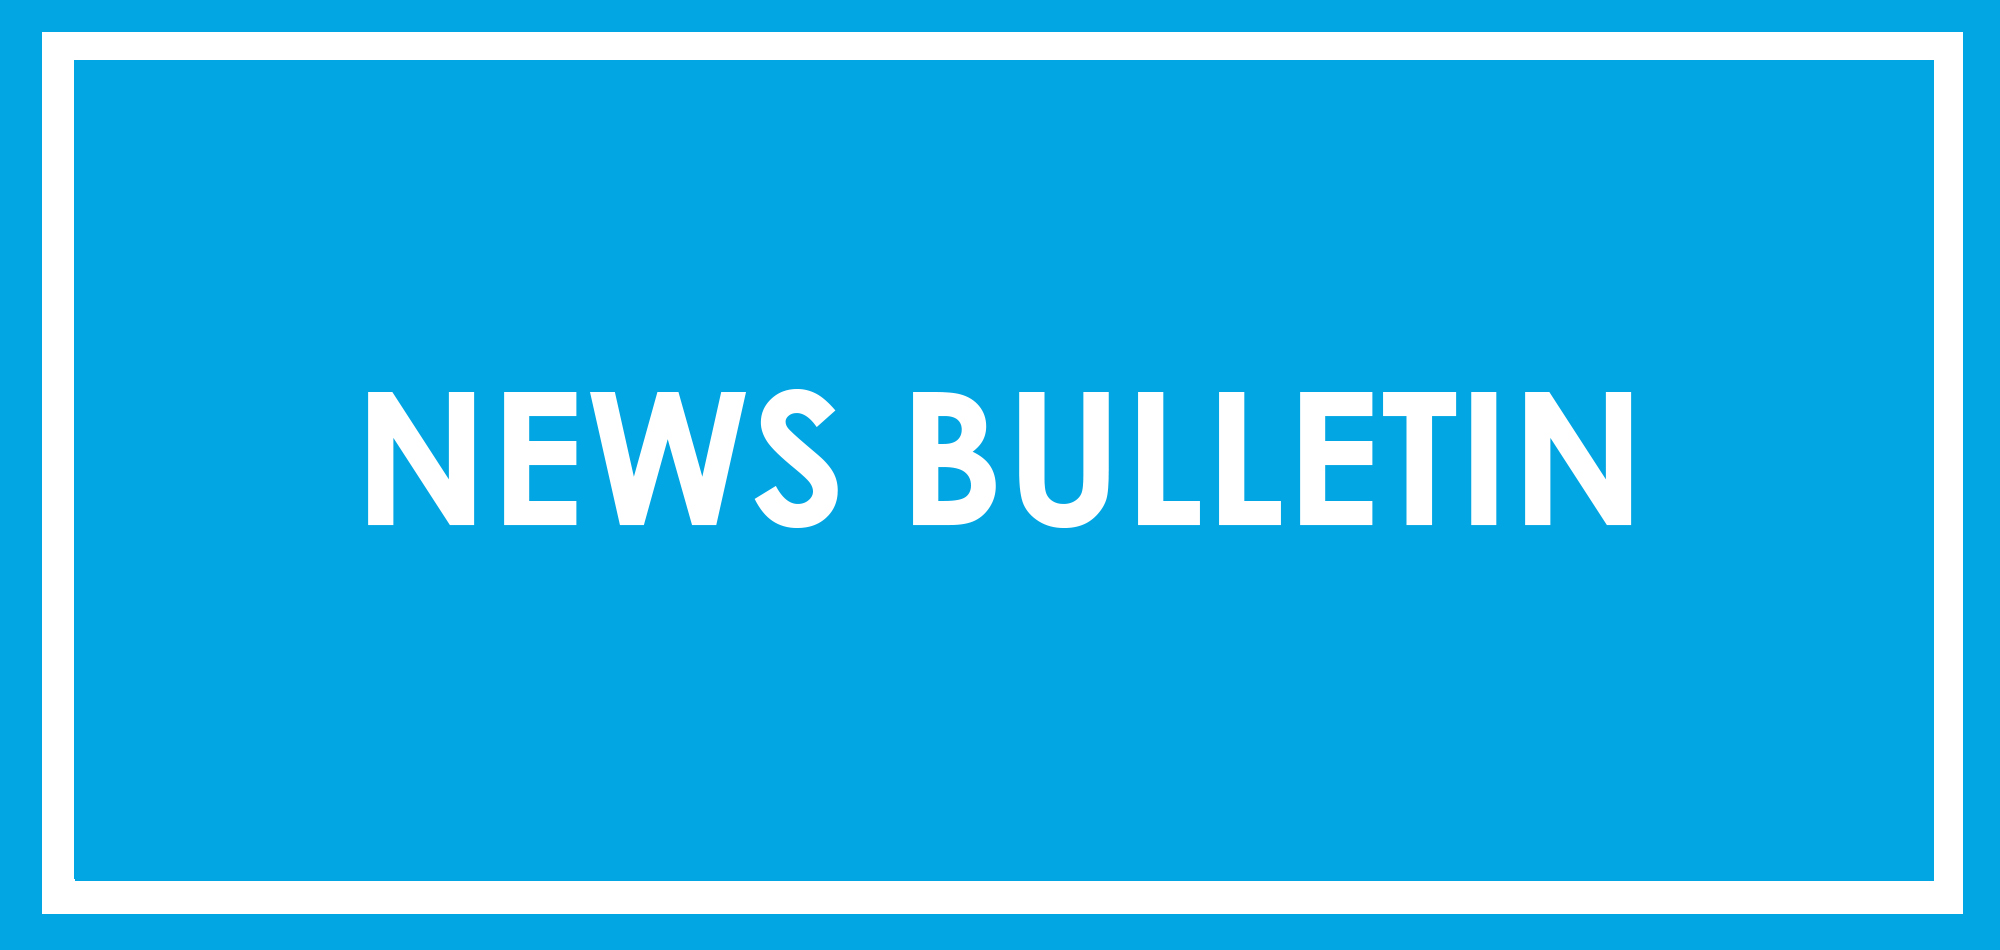 News Bulletin - 21.06.21